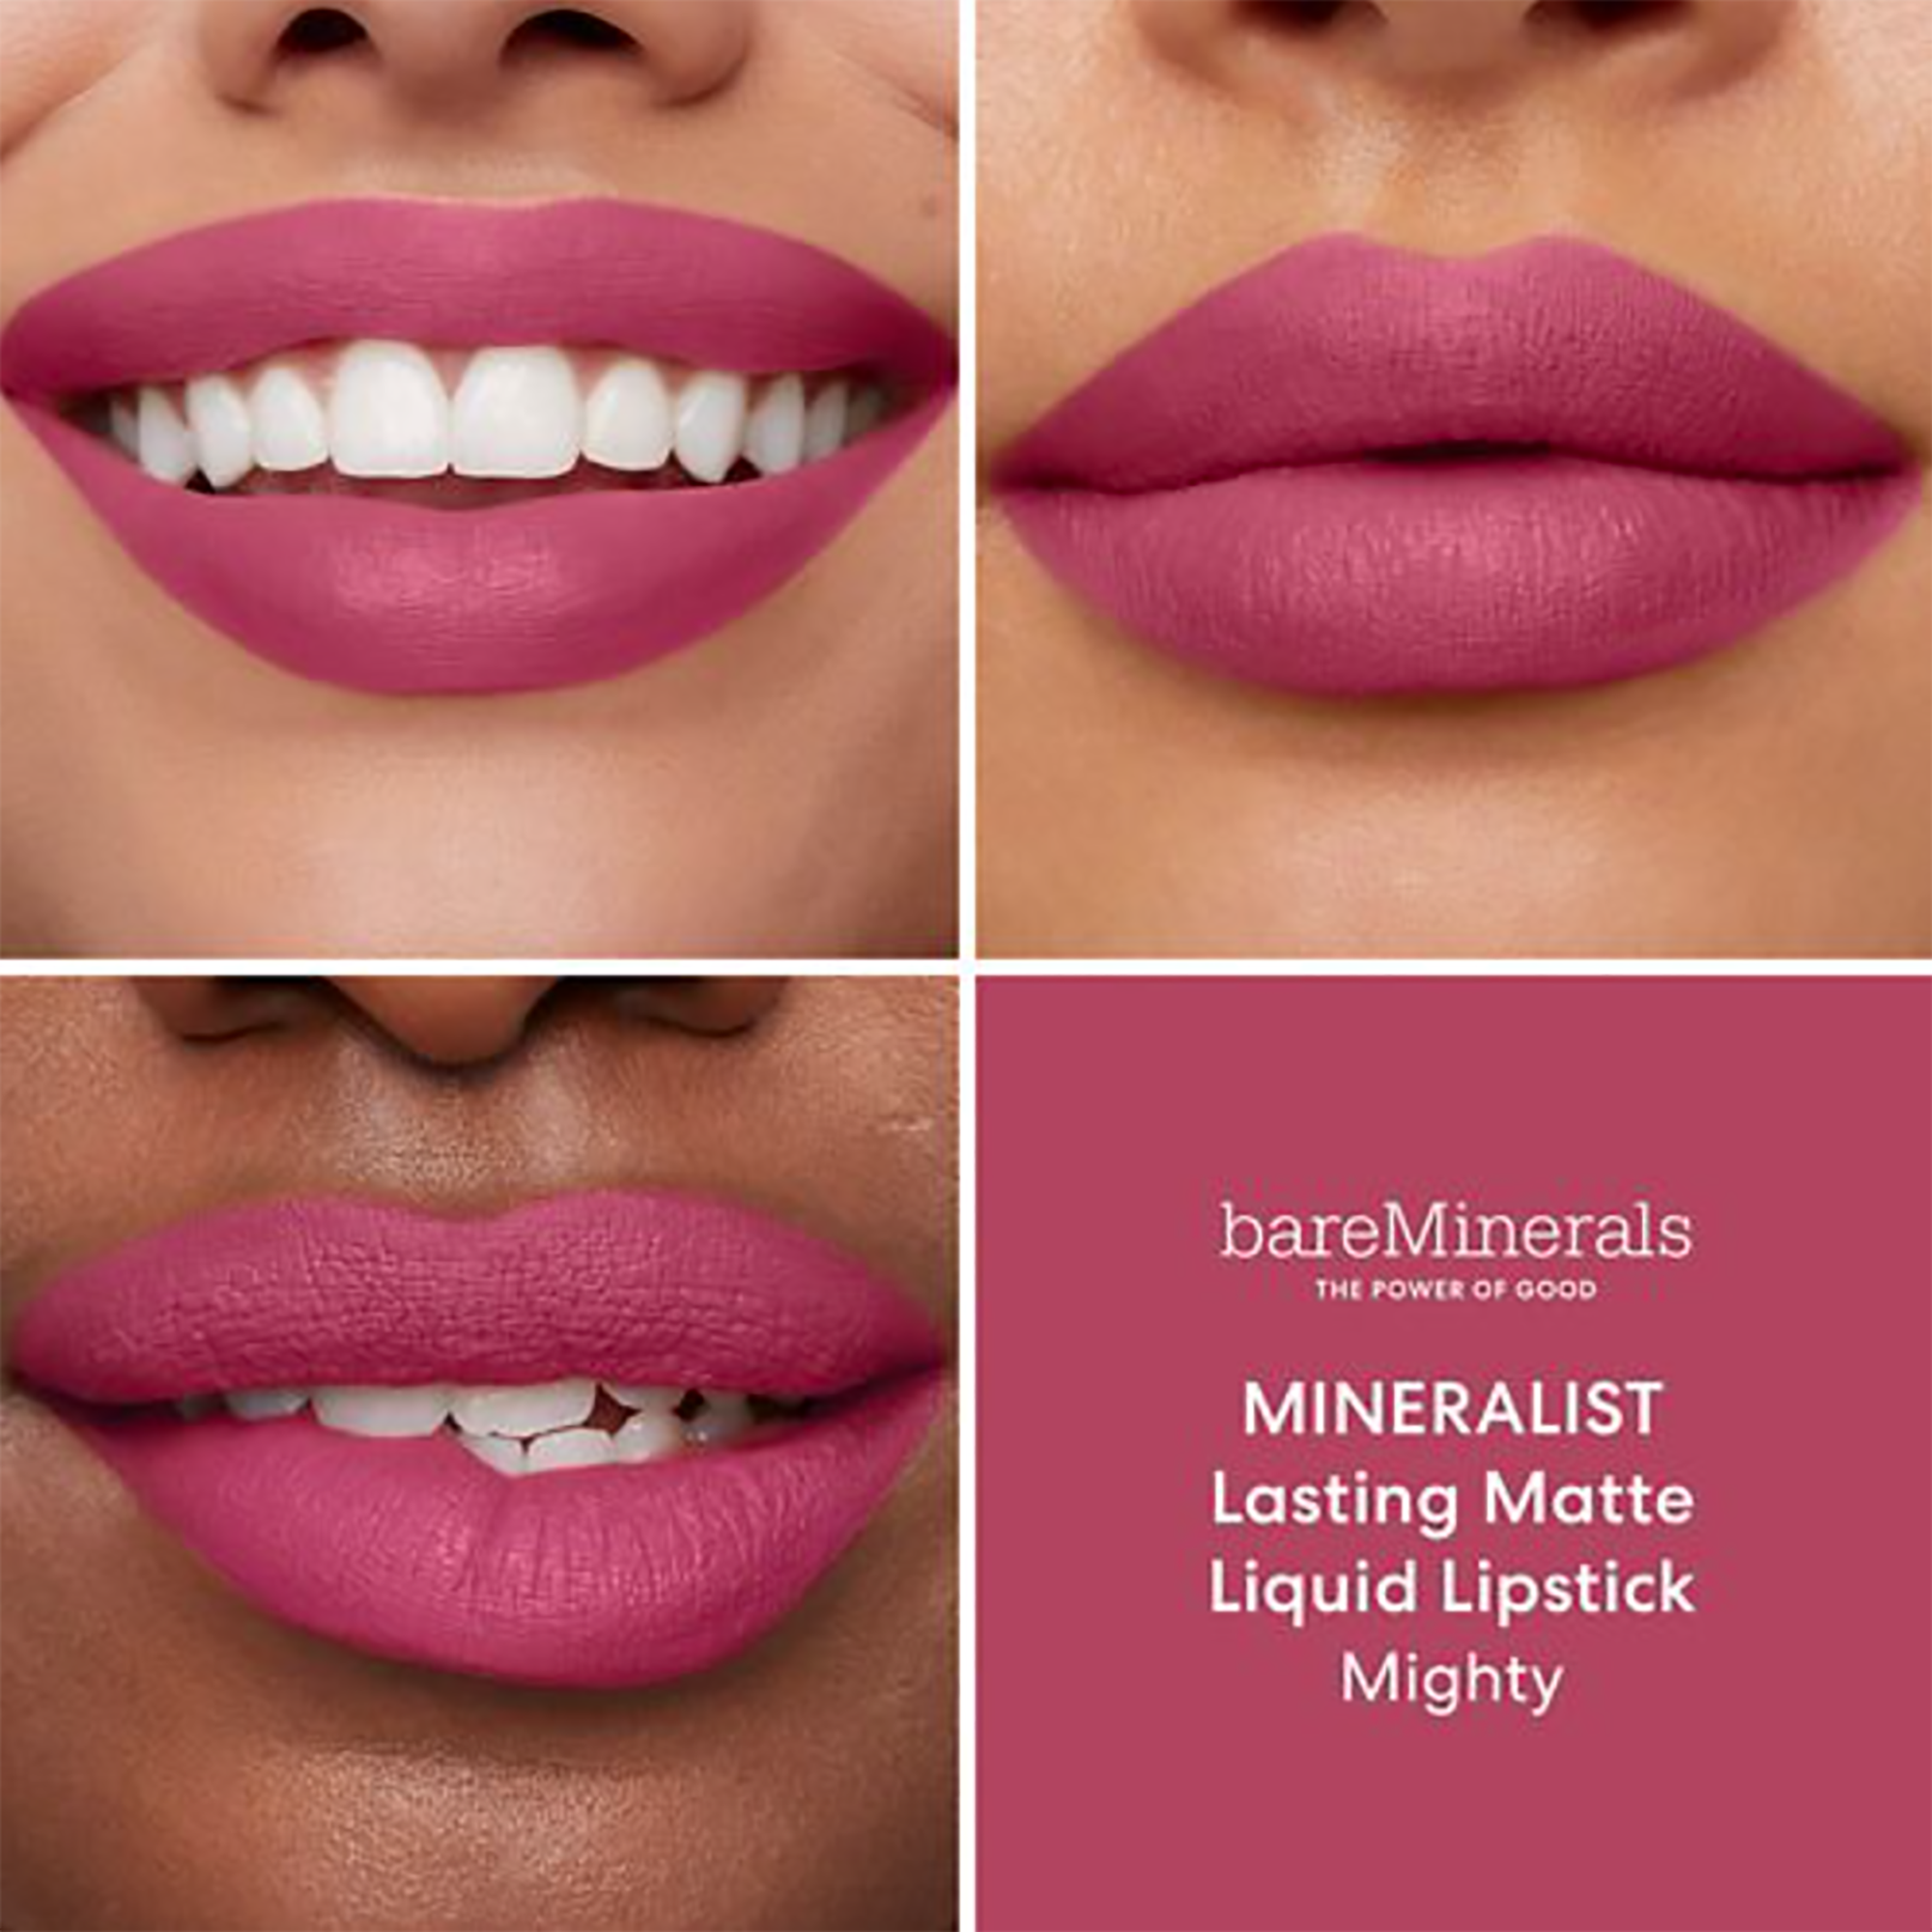 Bare Minerals Mineralist Lasting Matte Liquid Lipstick / MIGHTY